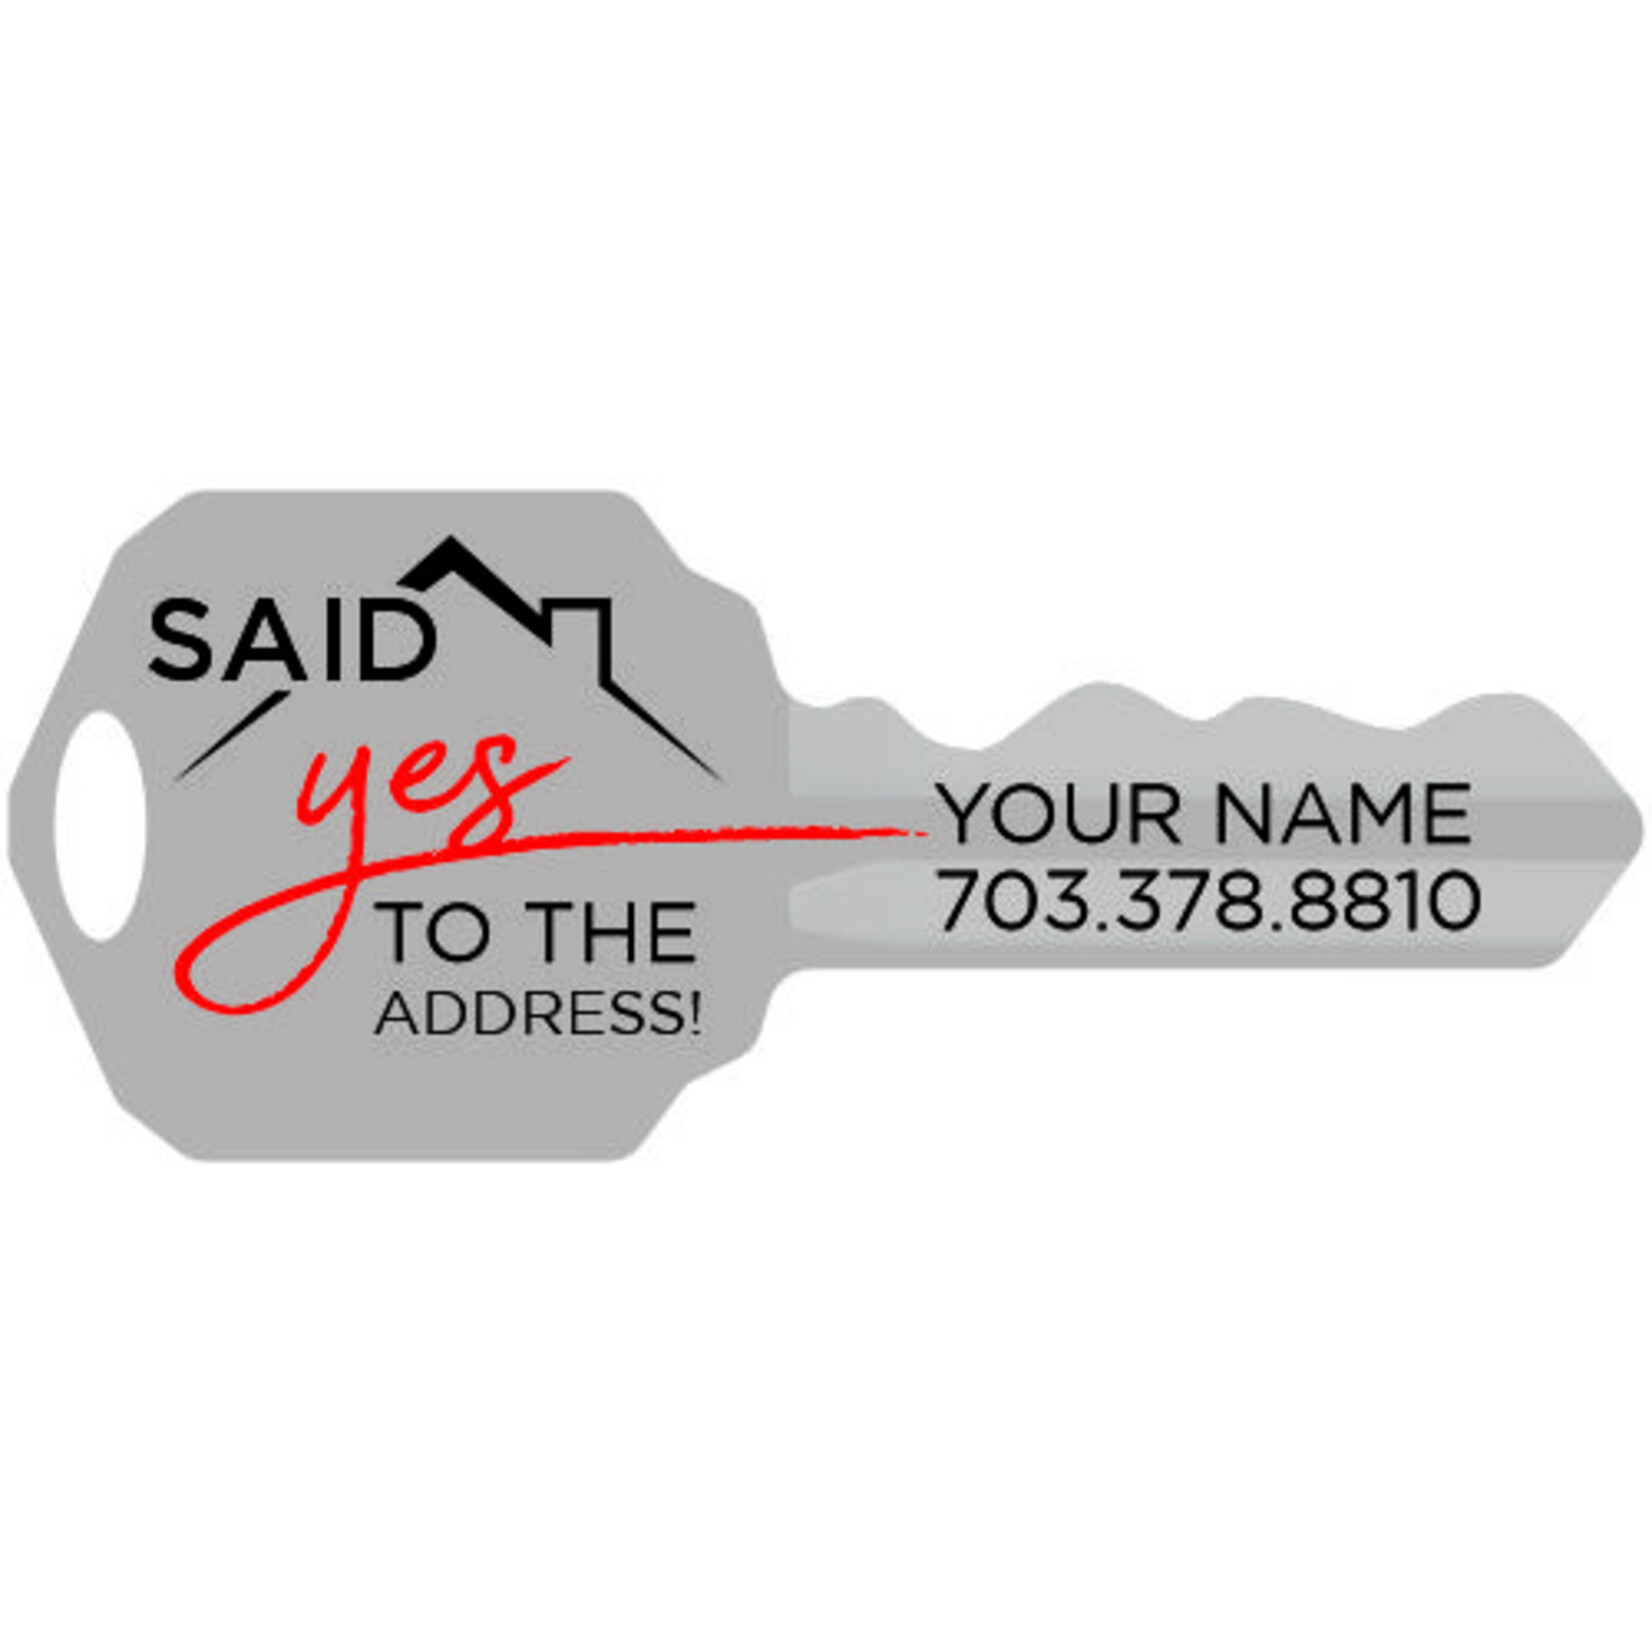 Said Yes To The Address - PVC Key